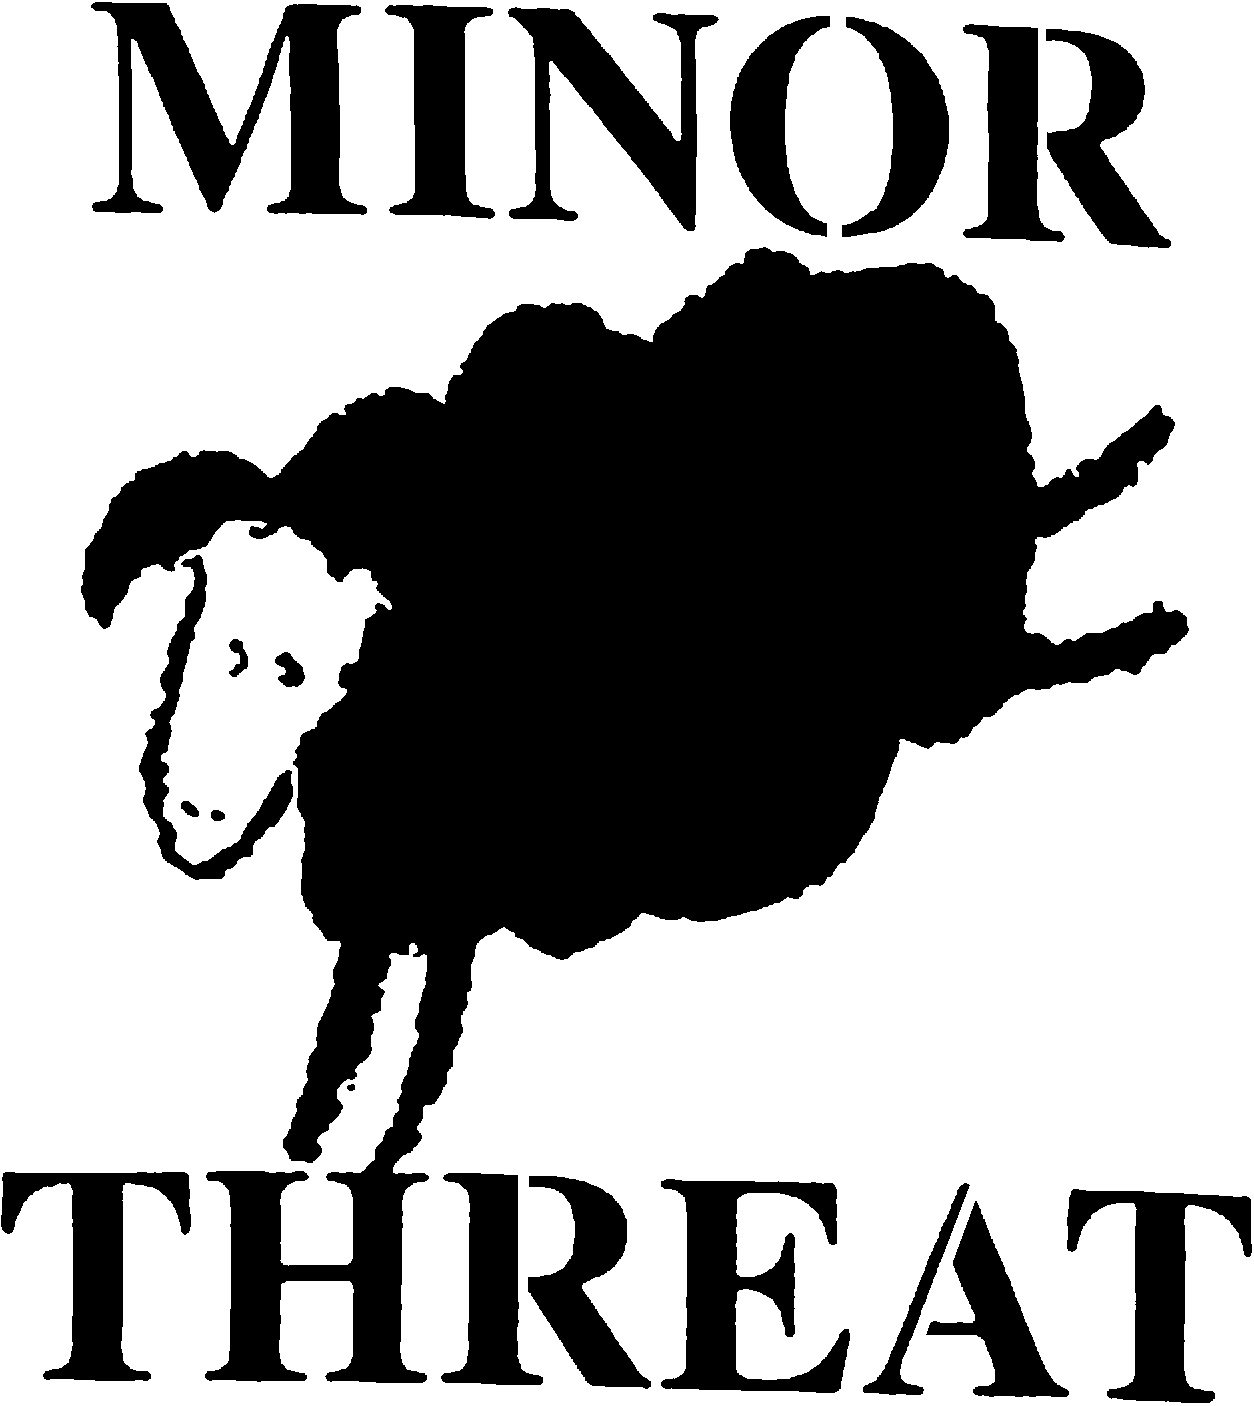 Minor Threat Logo - Minor threat Logos